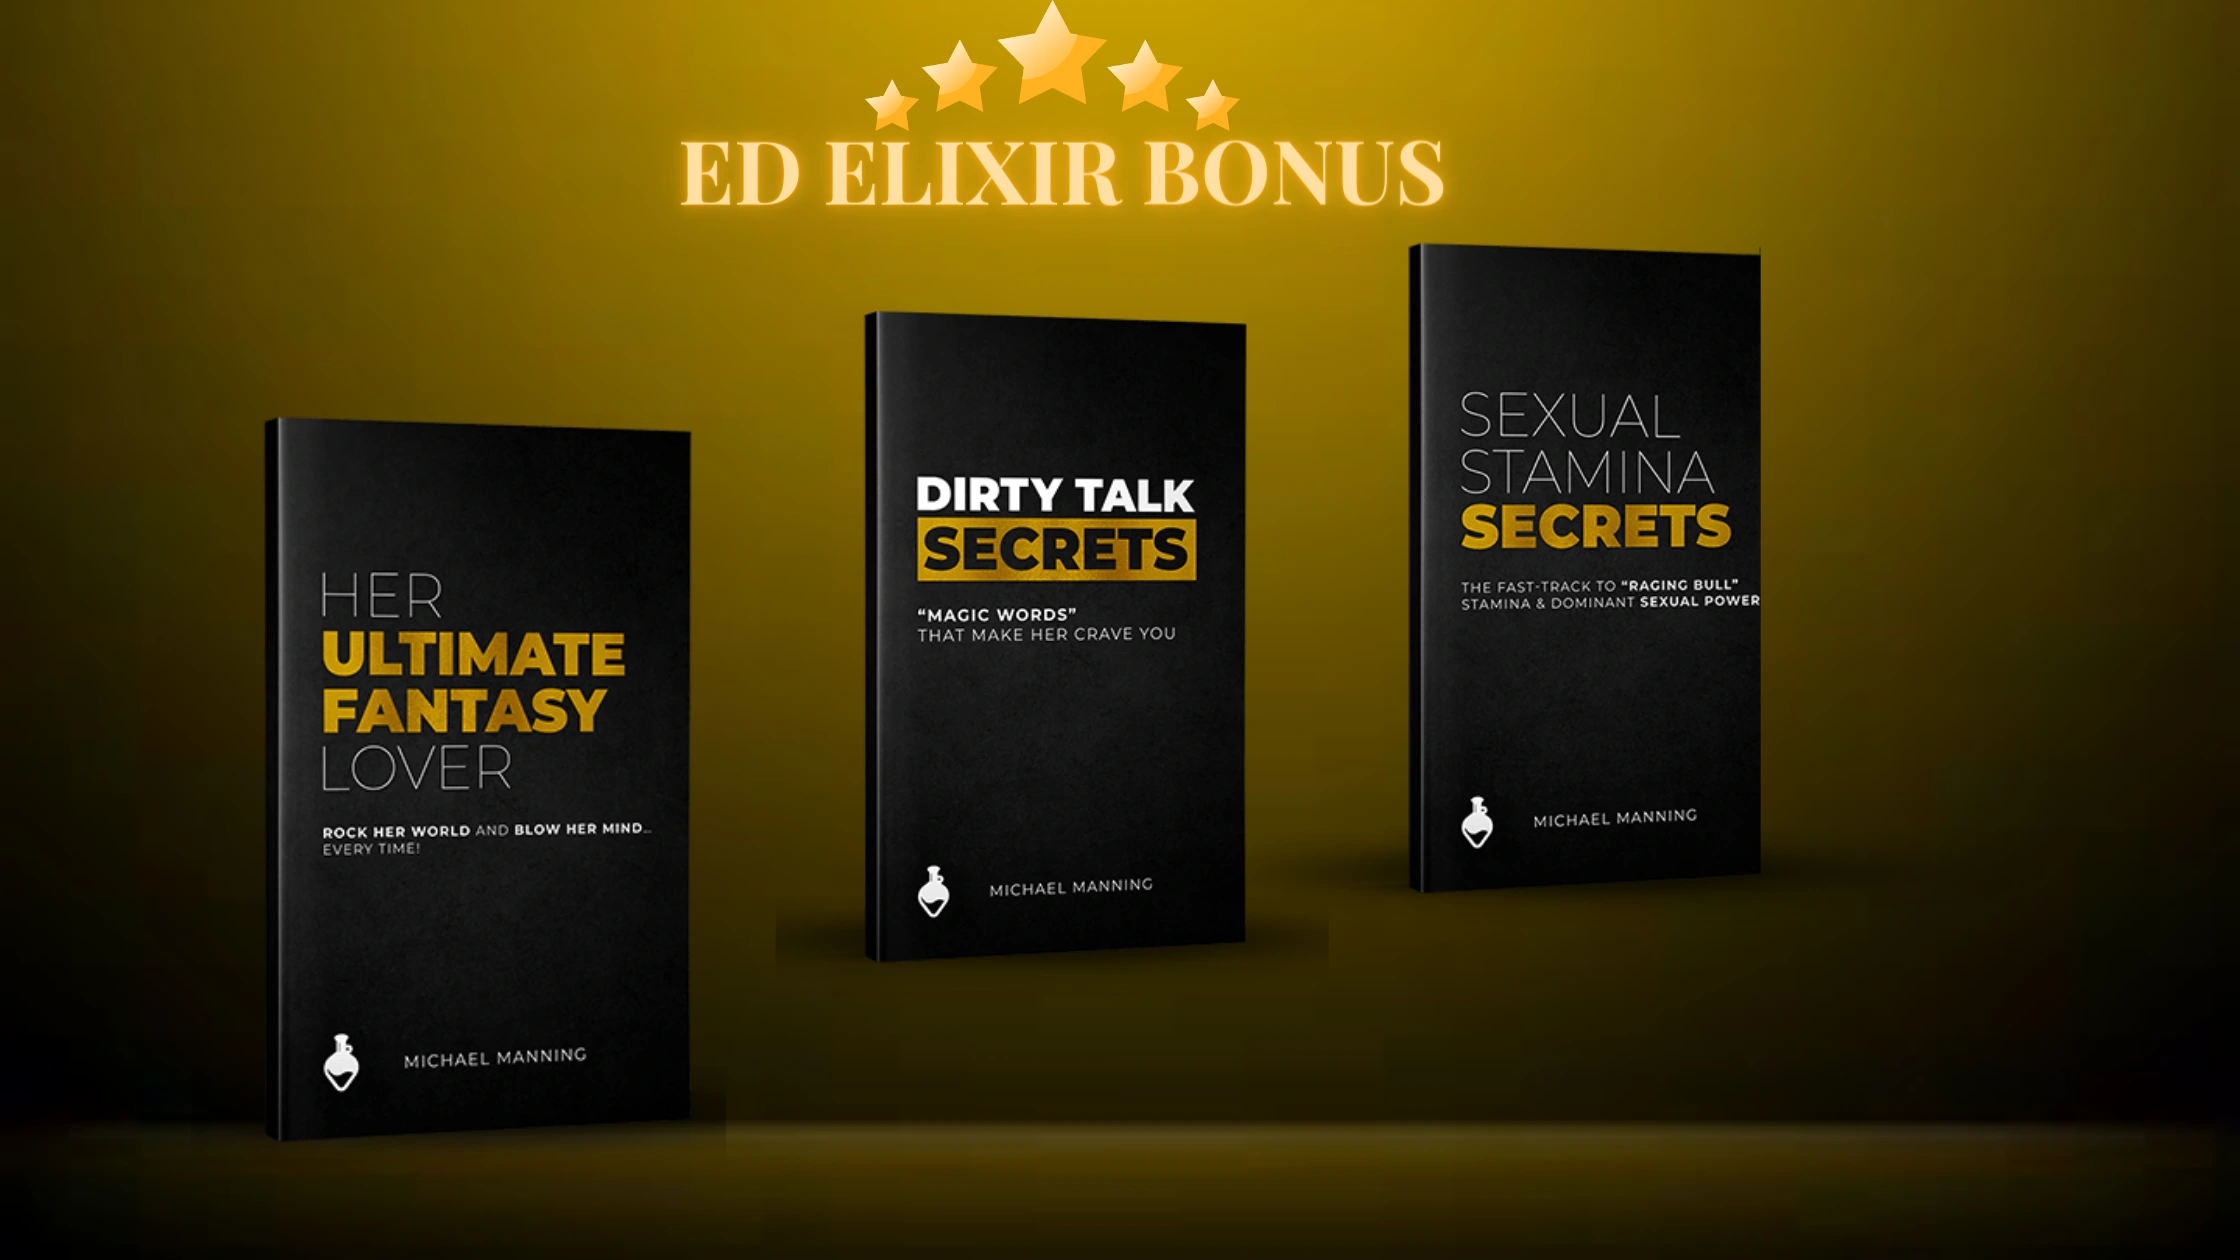 ED Elixir bonuses